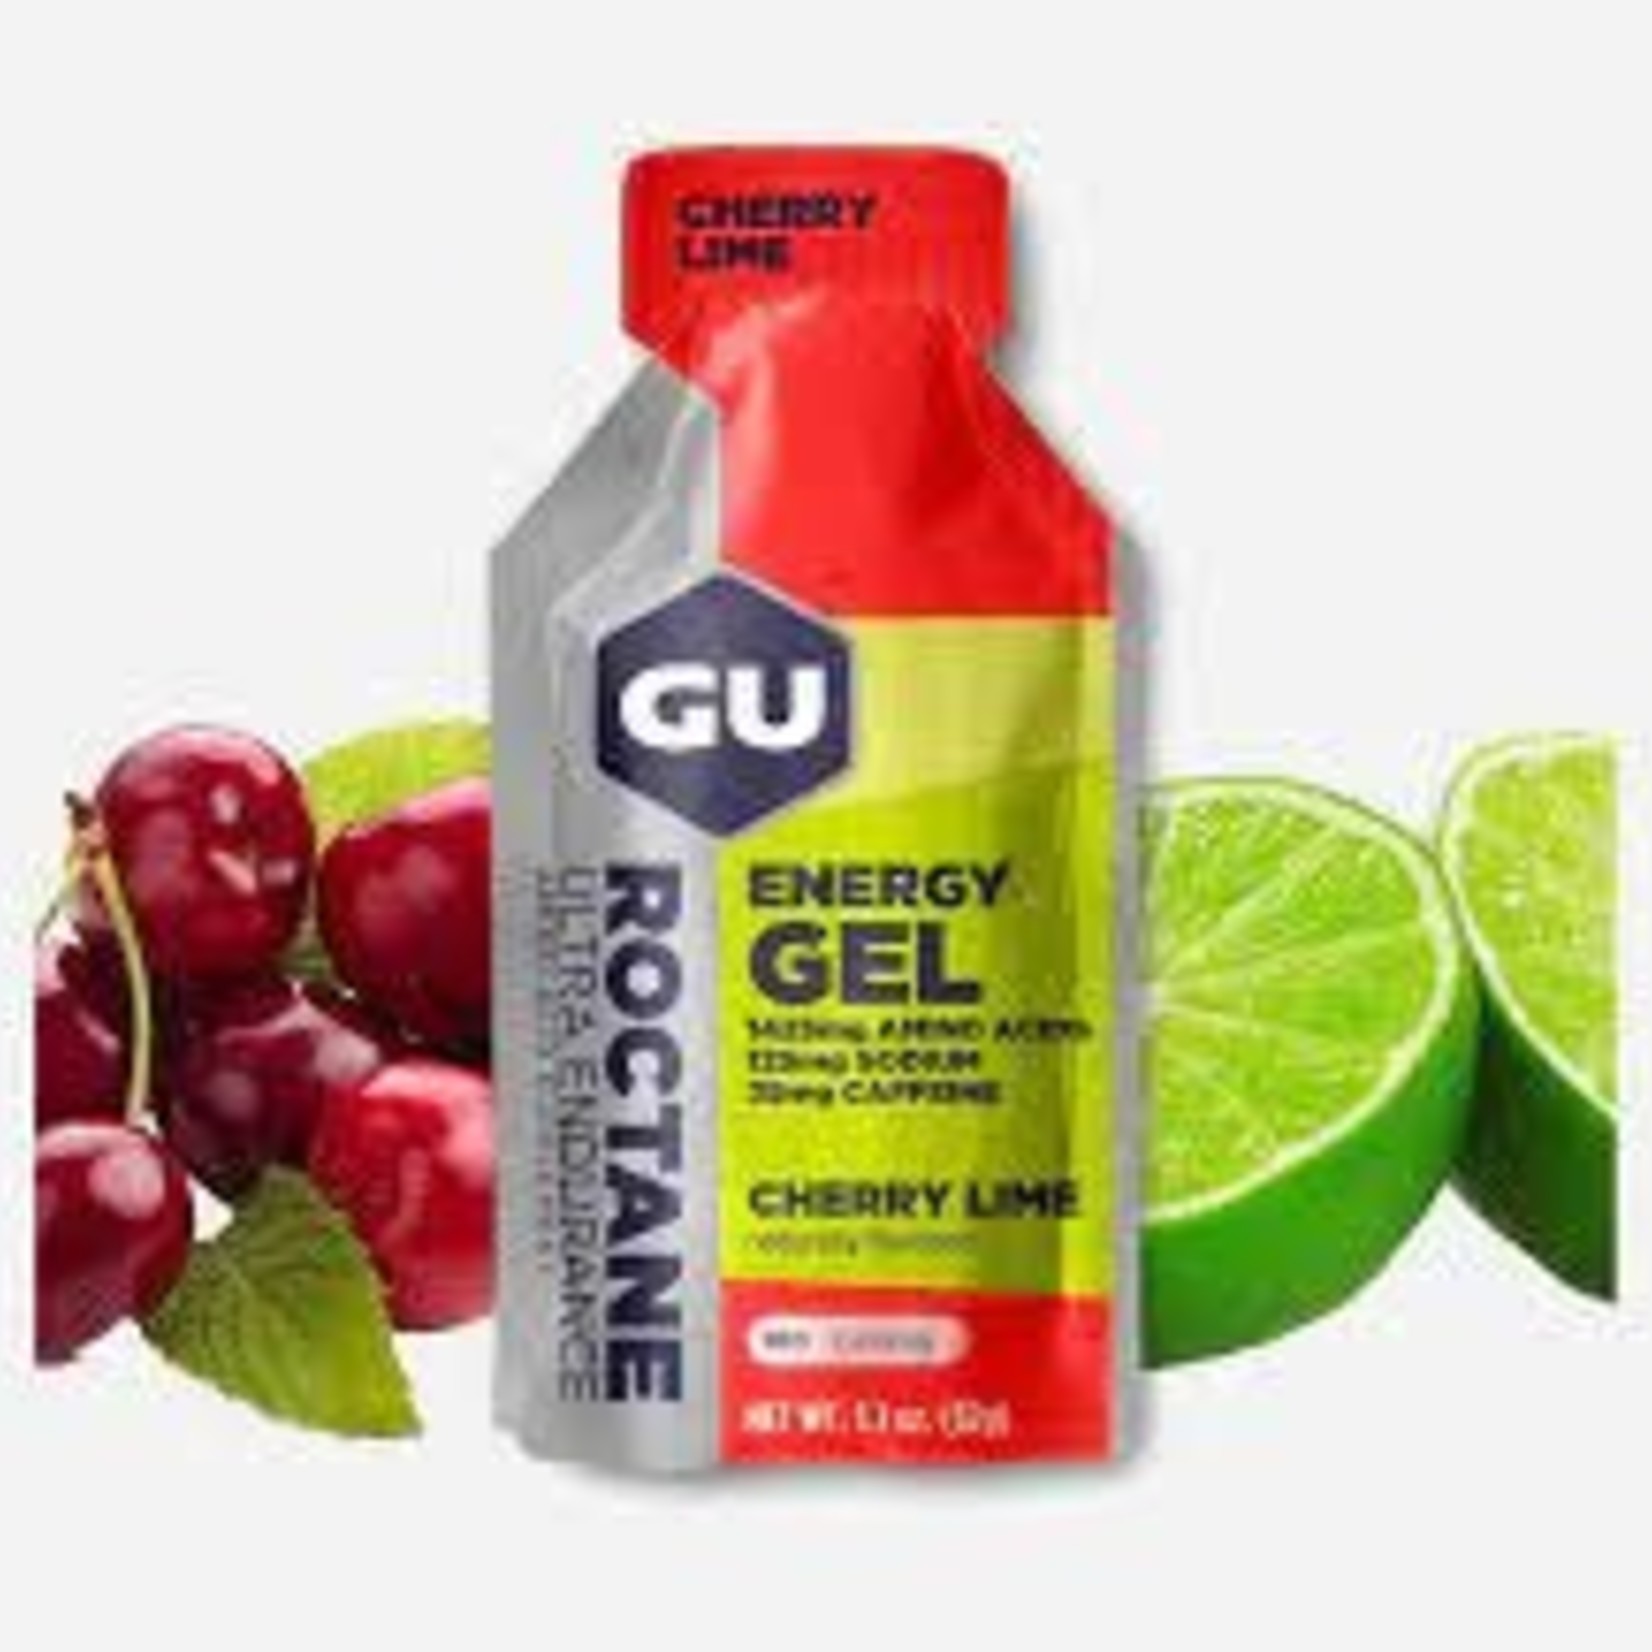 GU Energy Labs GU Roctane Cherry Lime Box of 24 single